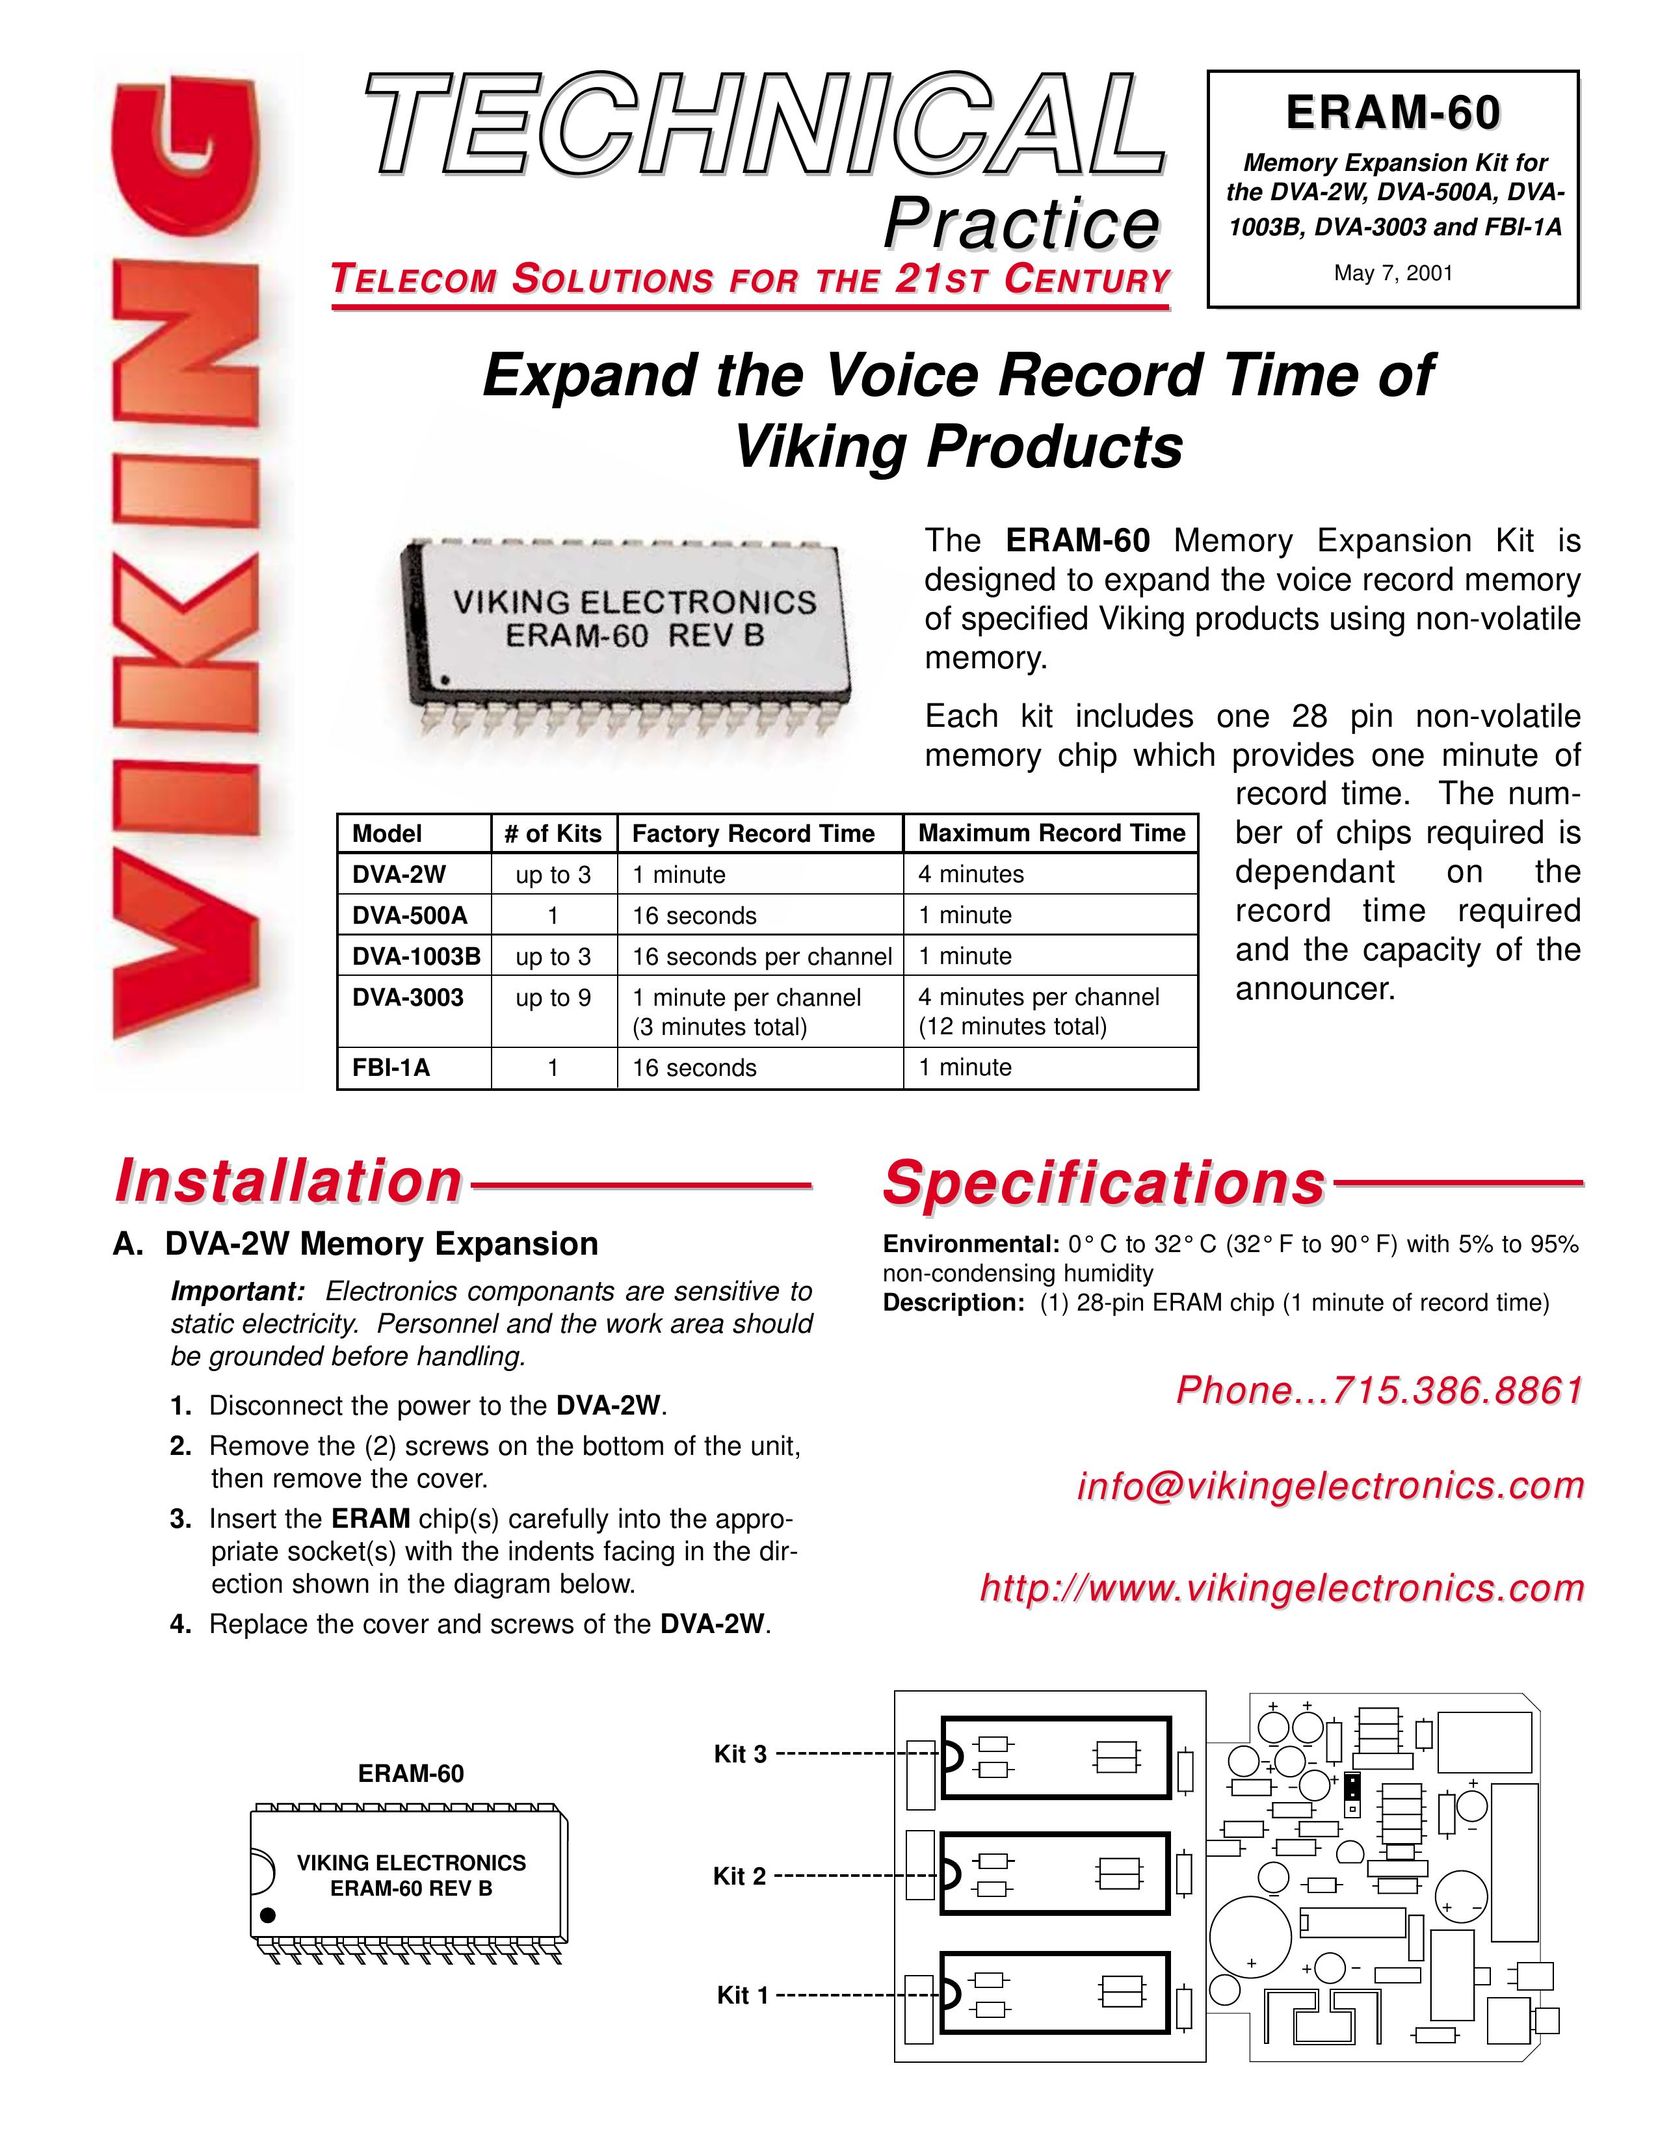 Viking Electronics DVA-500A Video Gaming Accessories User Manual